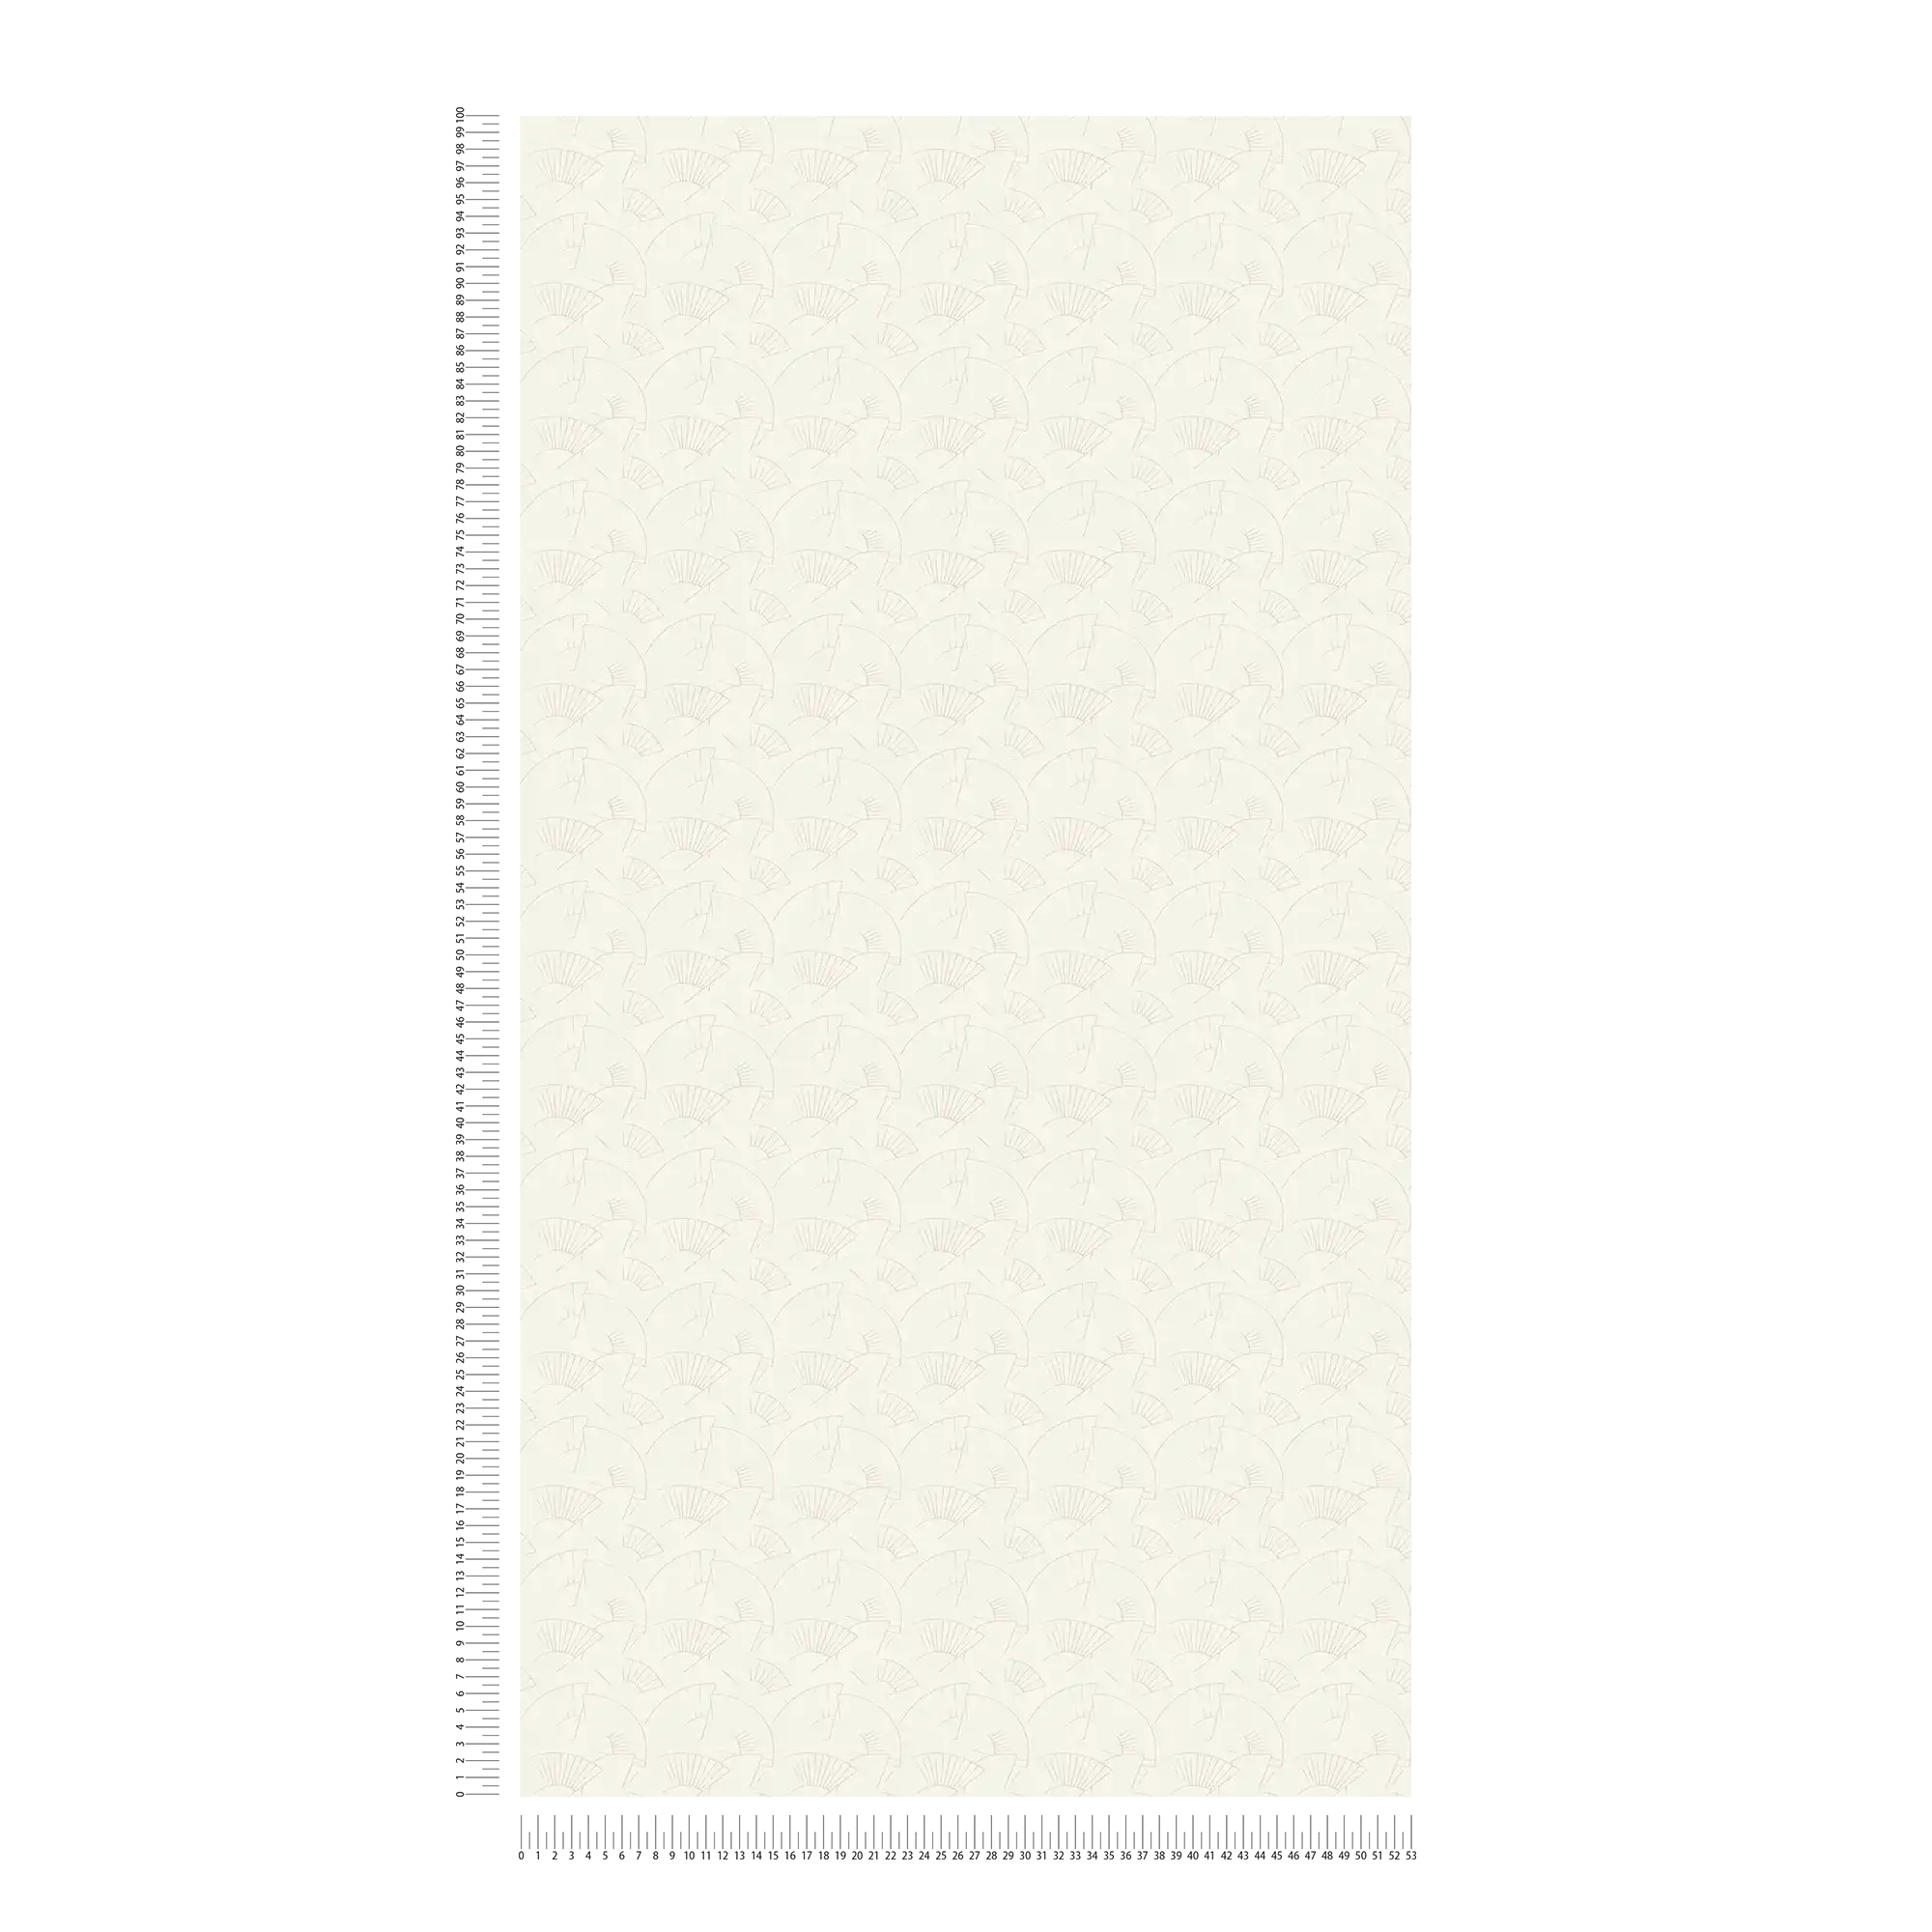             Papel pintado Karl LAGERFELD abanico - metálico, blanco
        